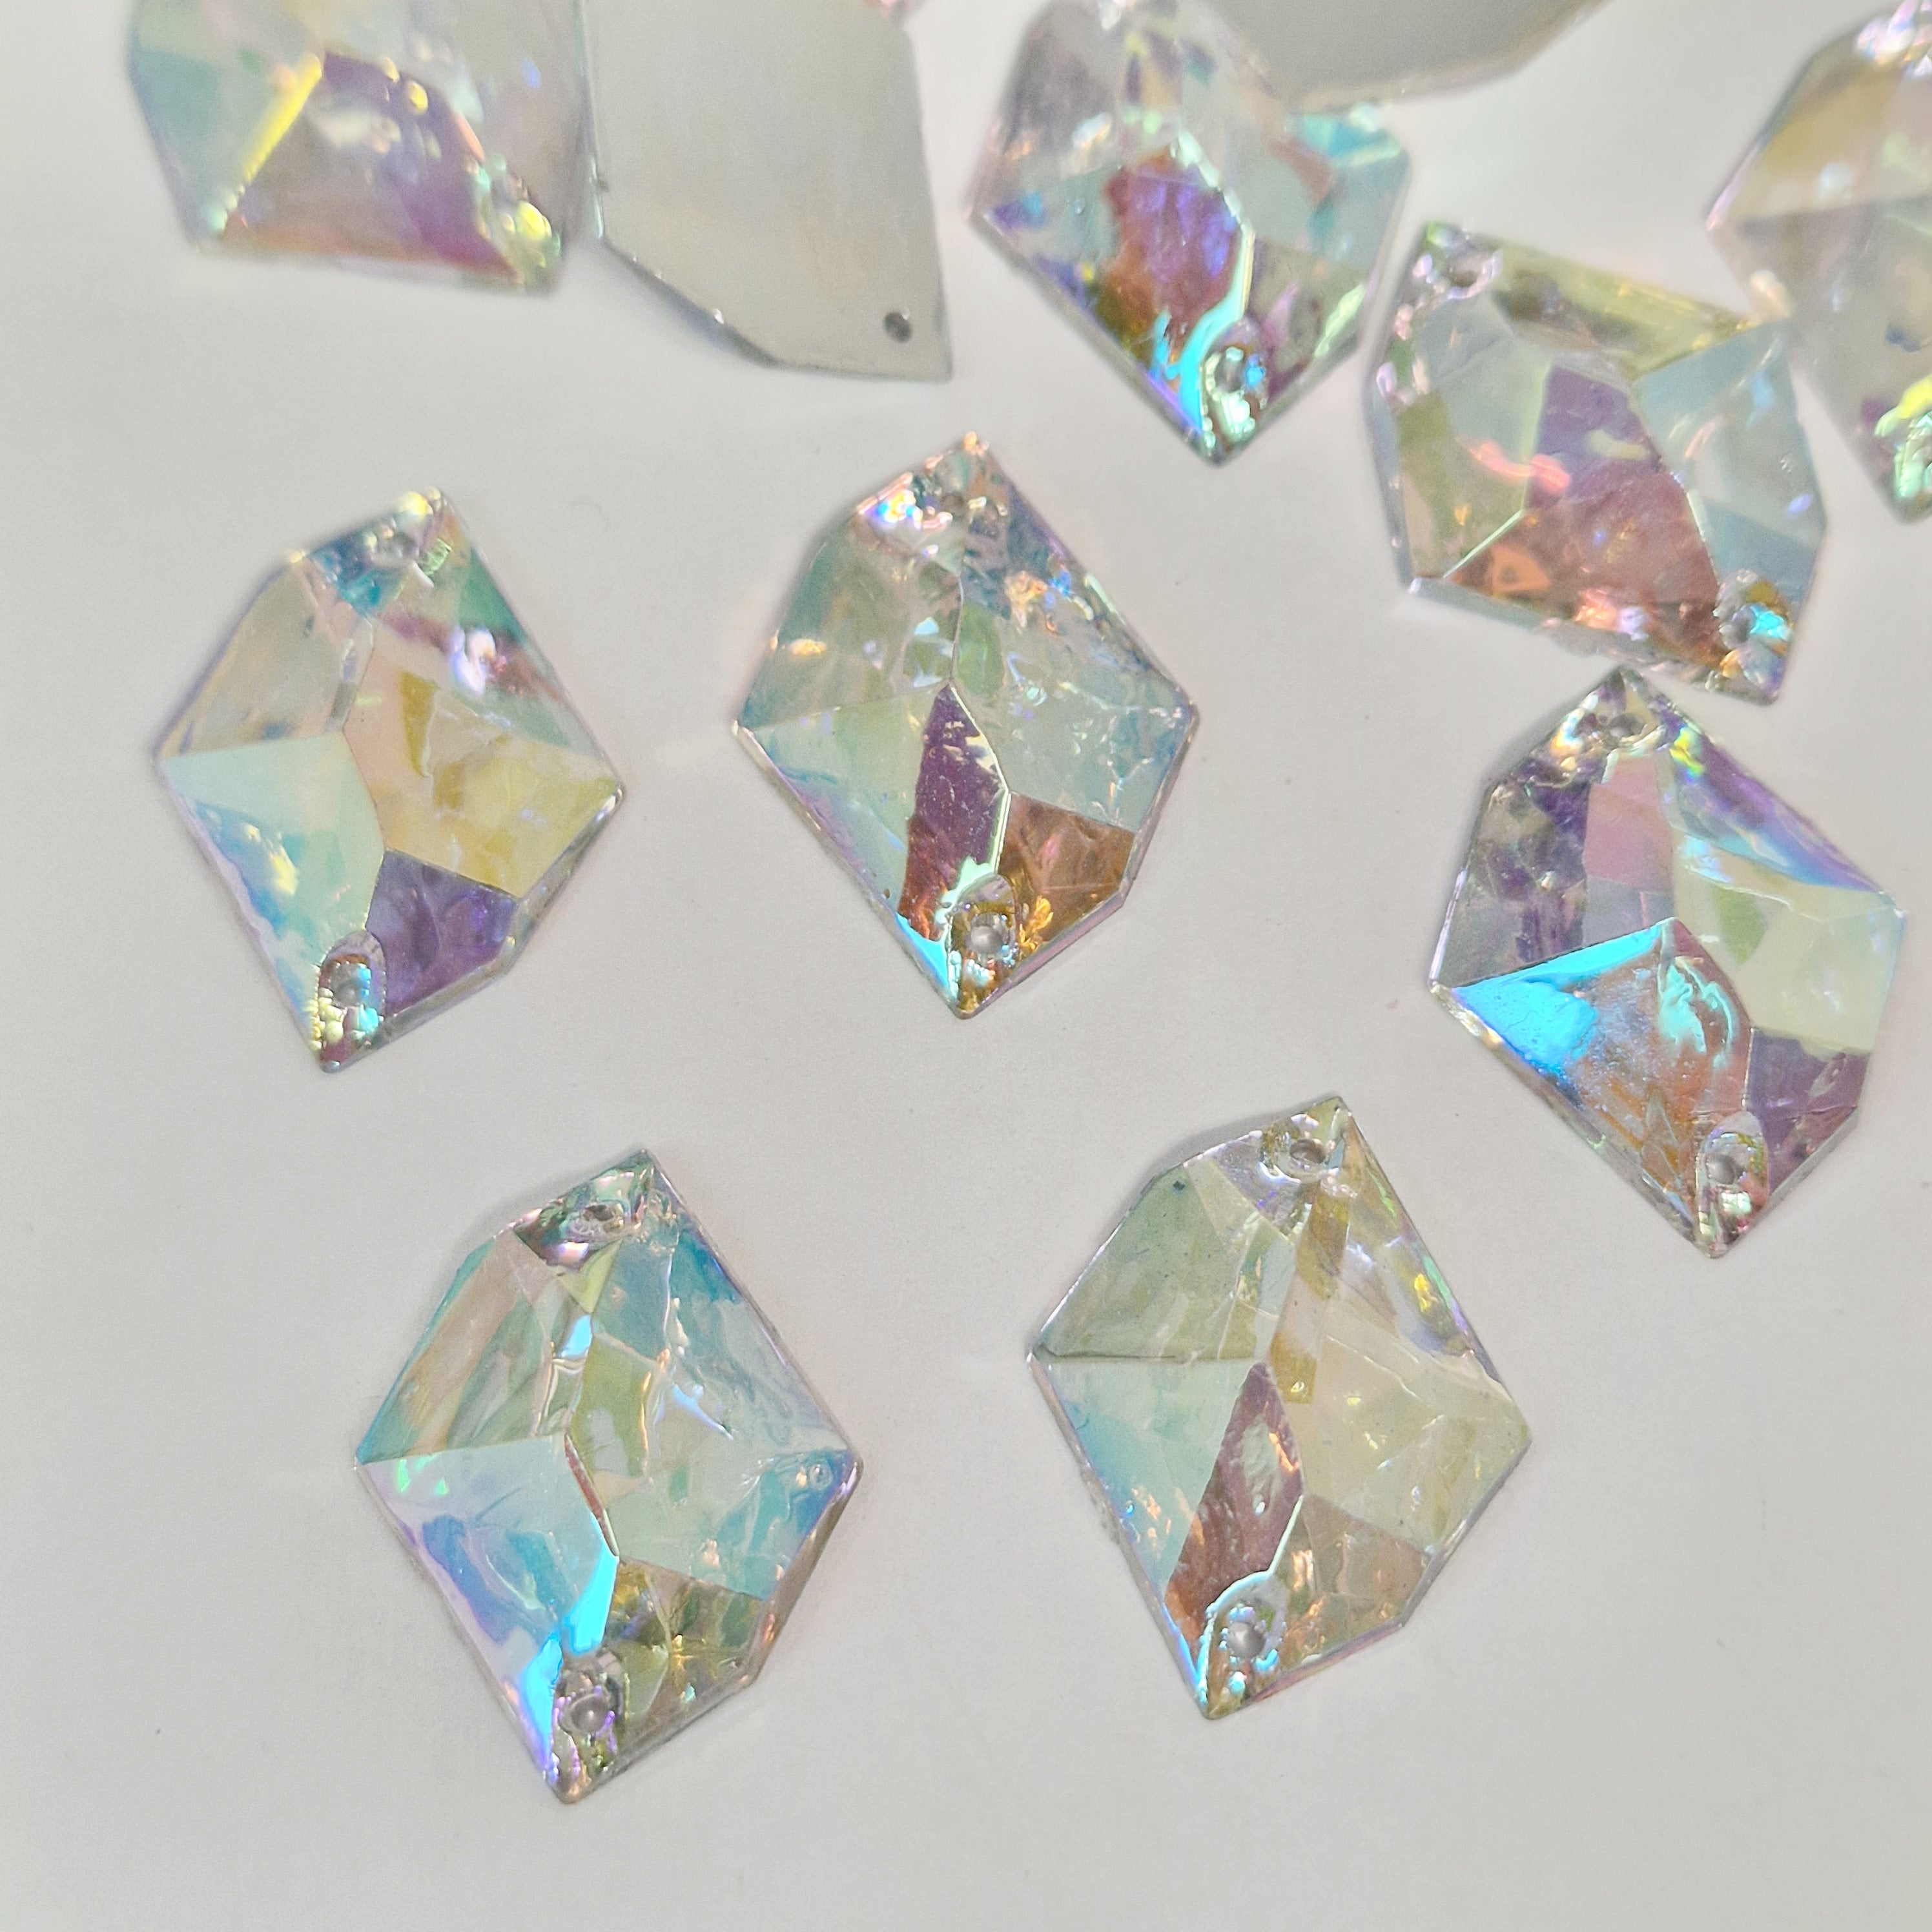 MajorCrafts 40pcs 20mm x 16mm Crystal AB Hexagon Irregular Acrylic Sewing Rhinestones